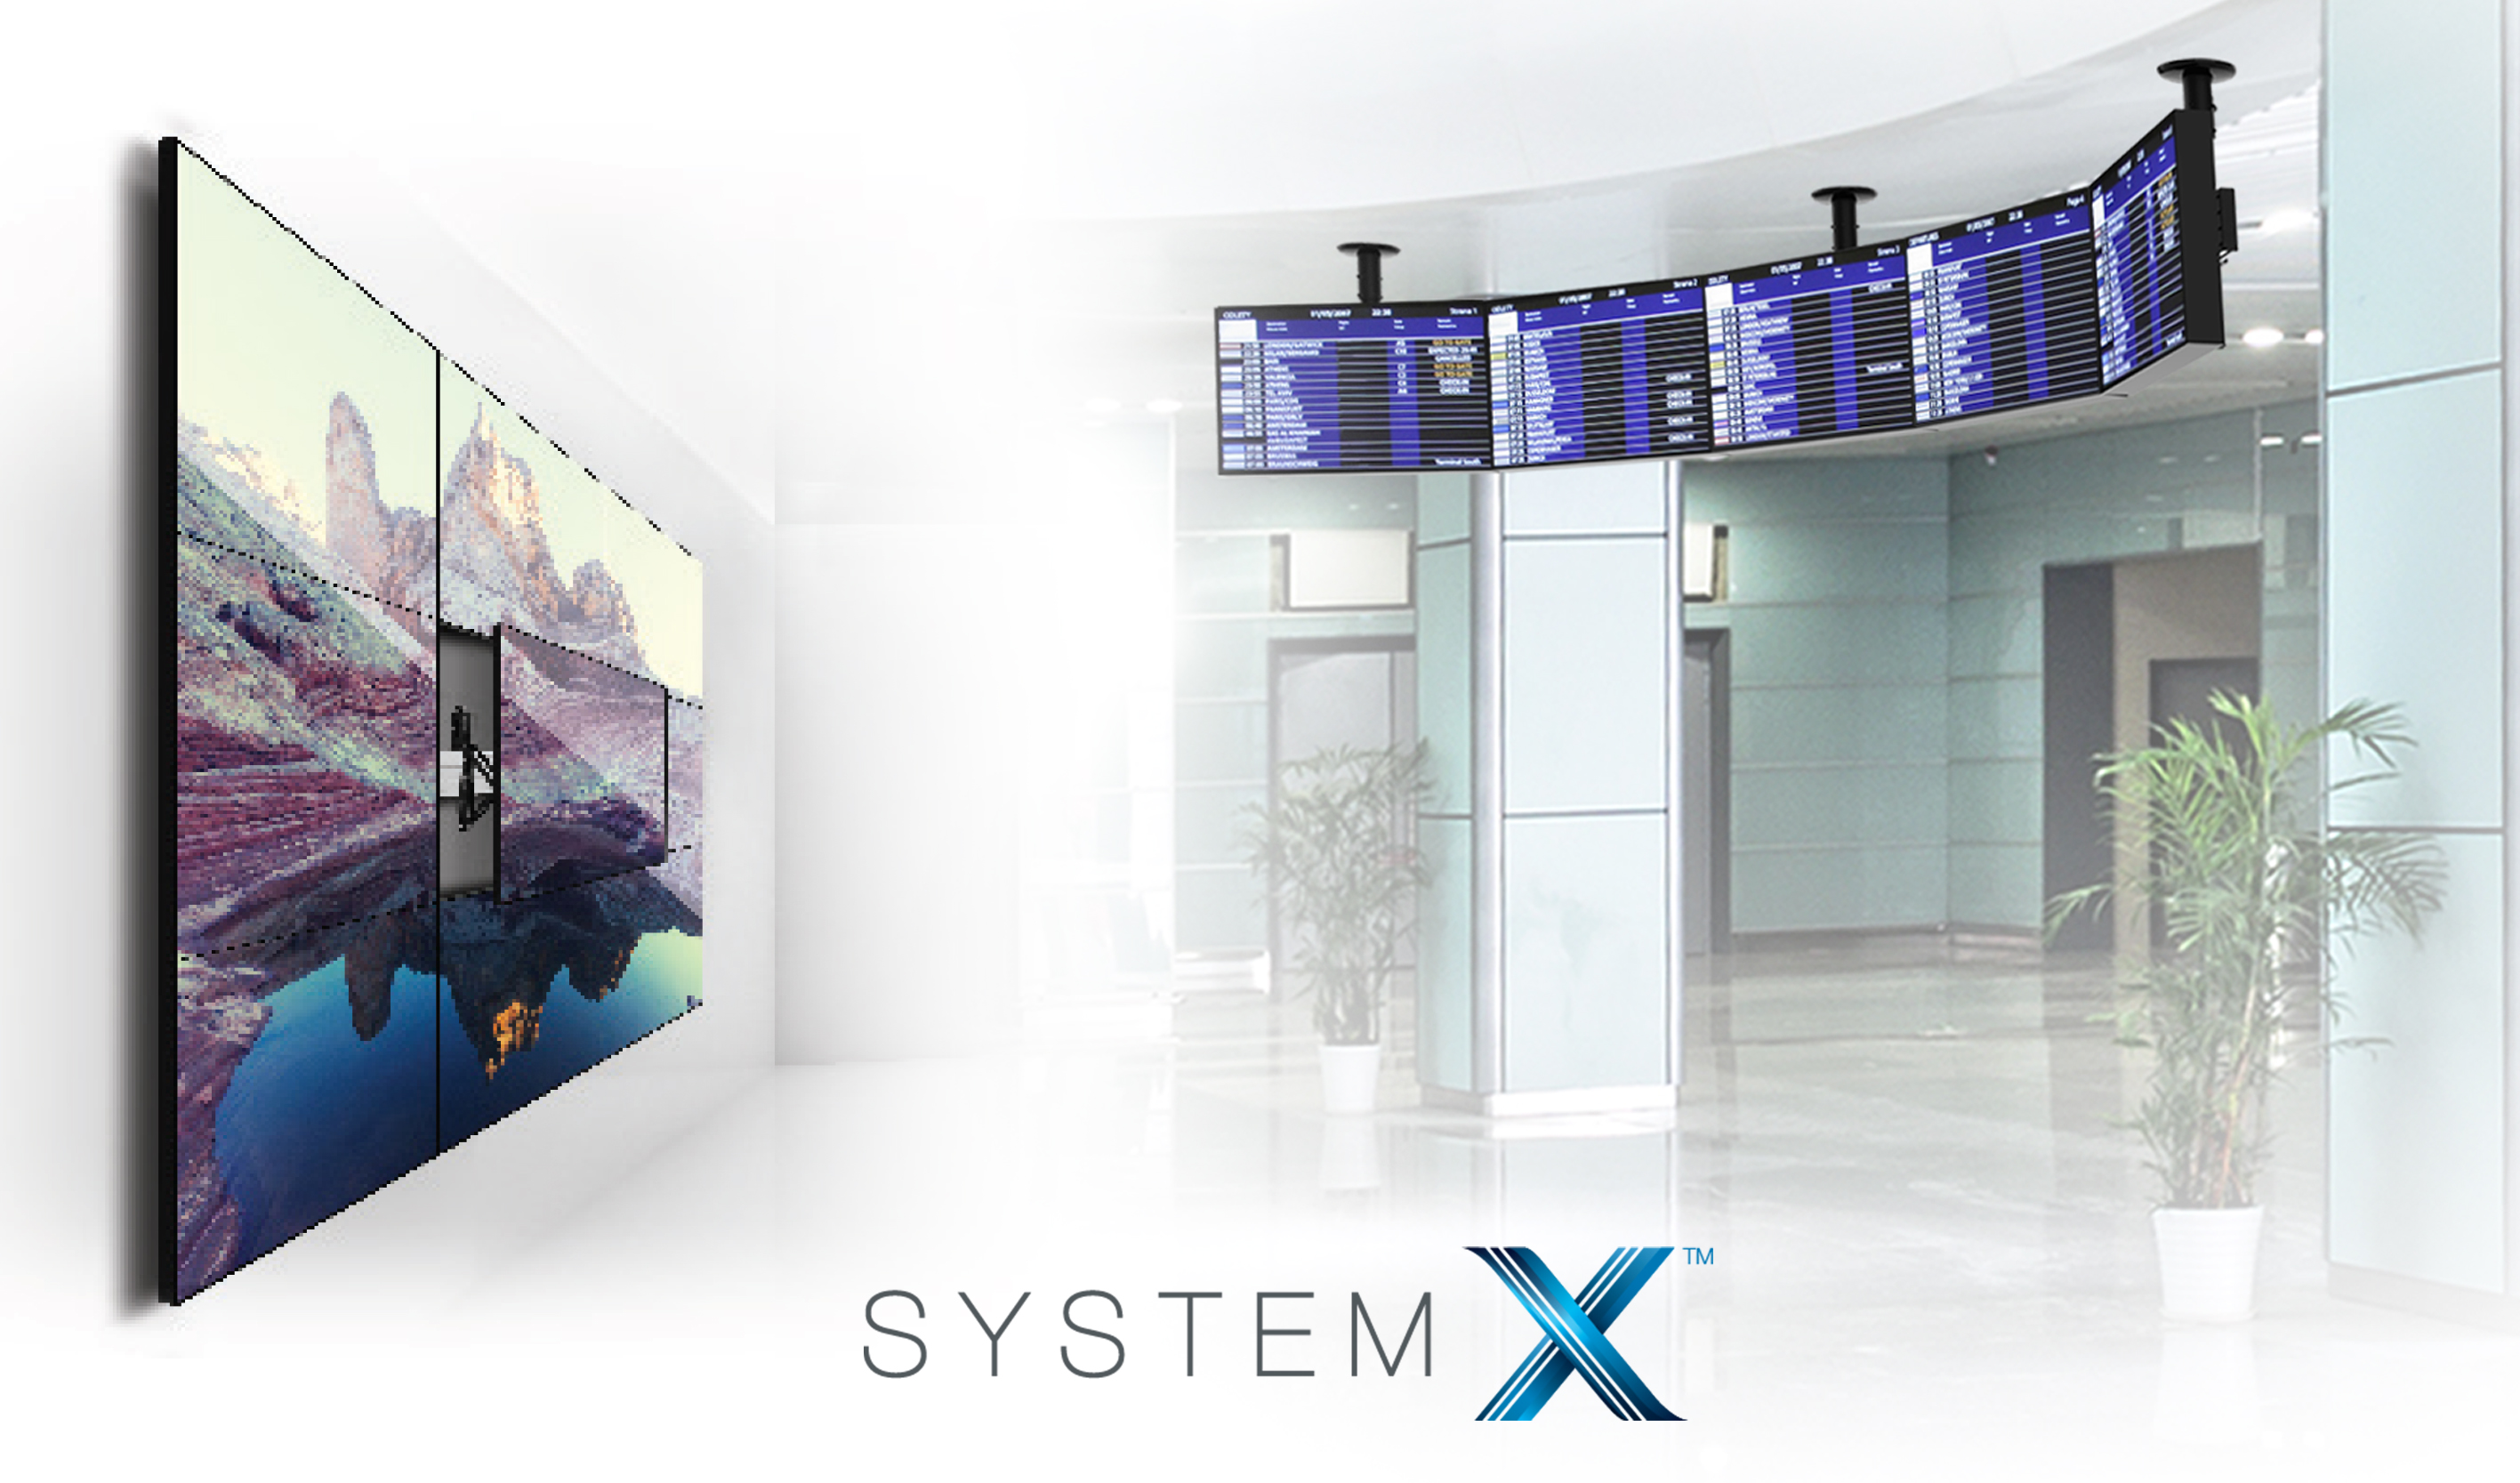 B-Tech System X 5 Year Anniversary